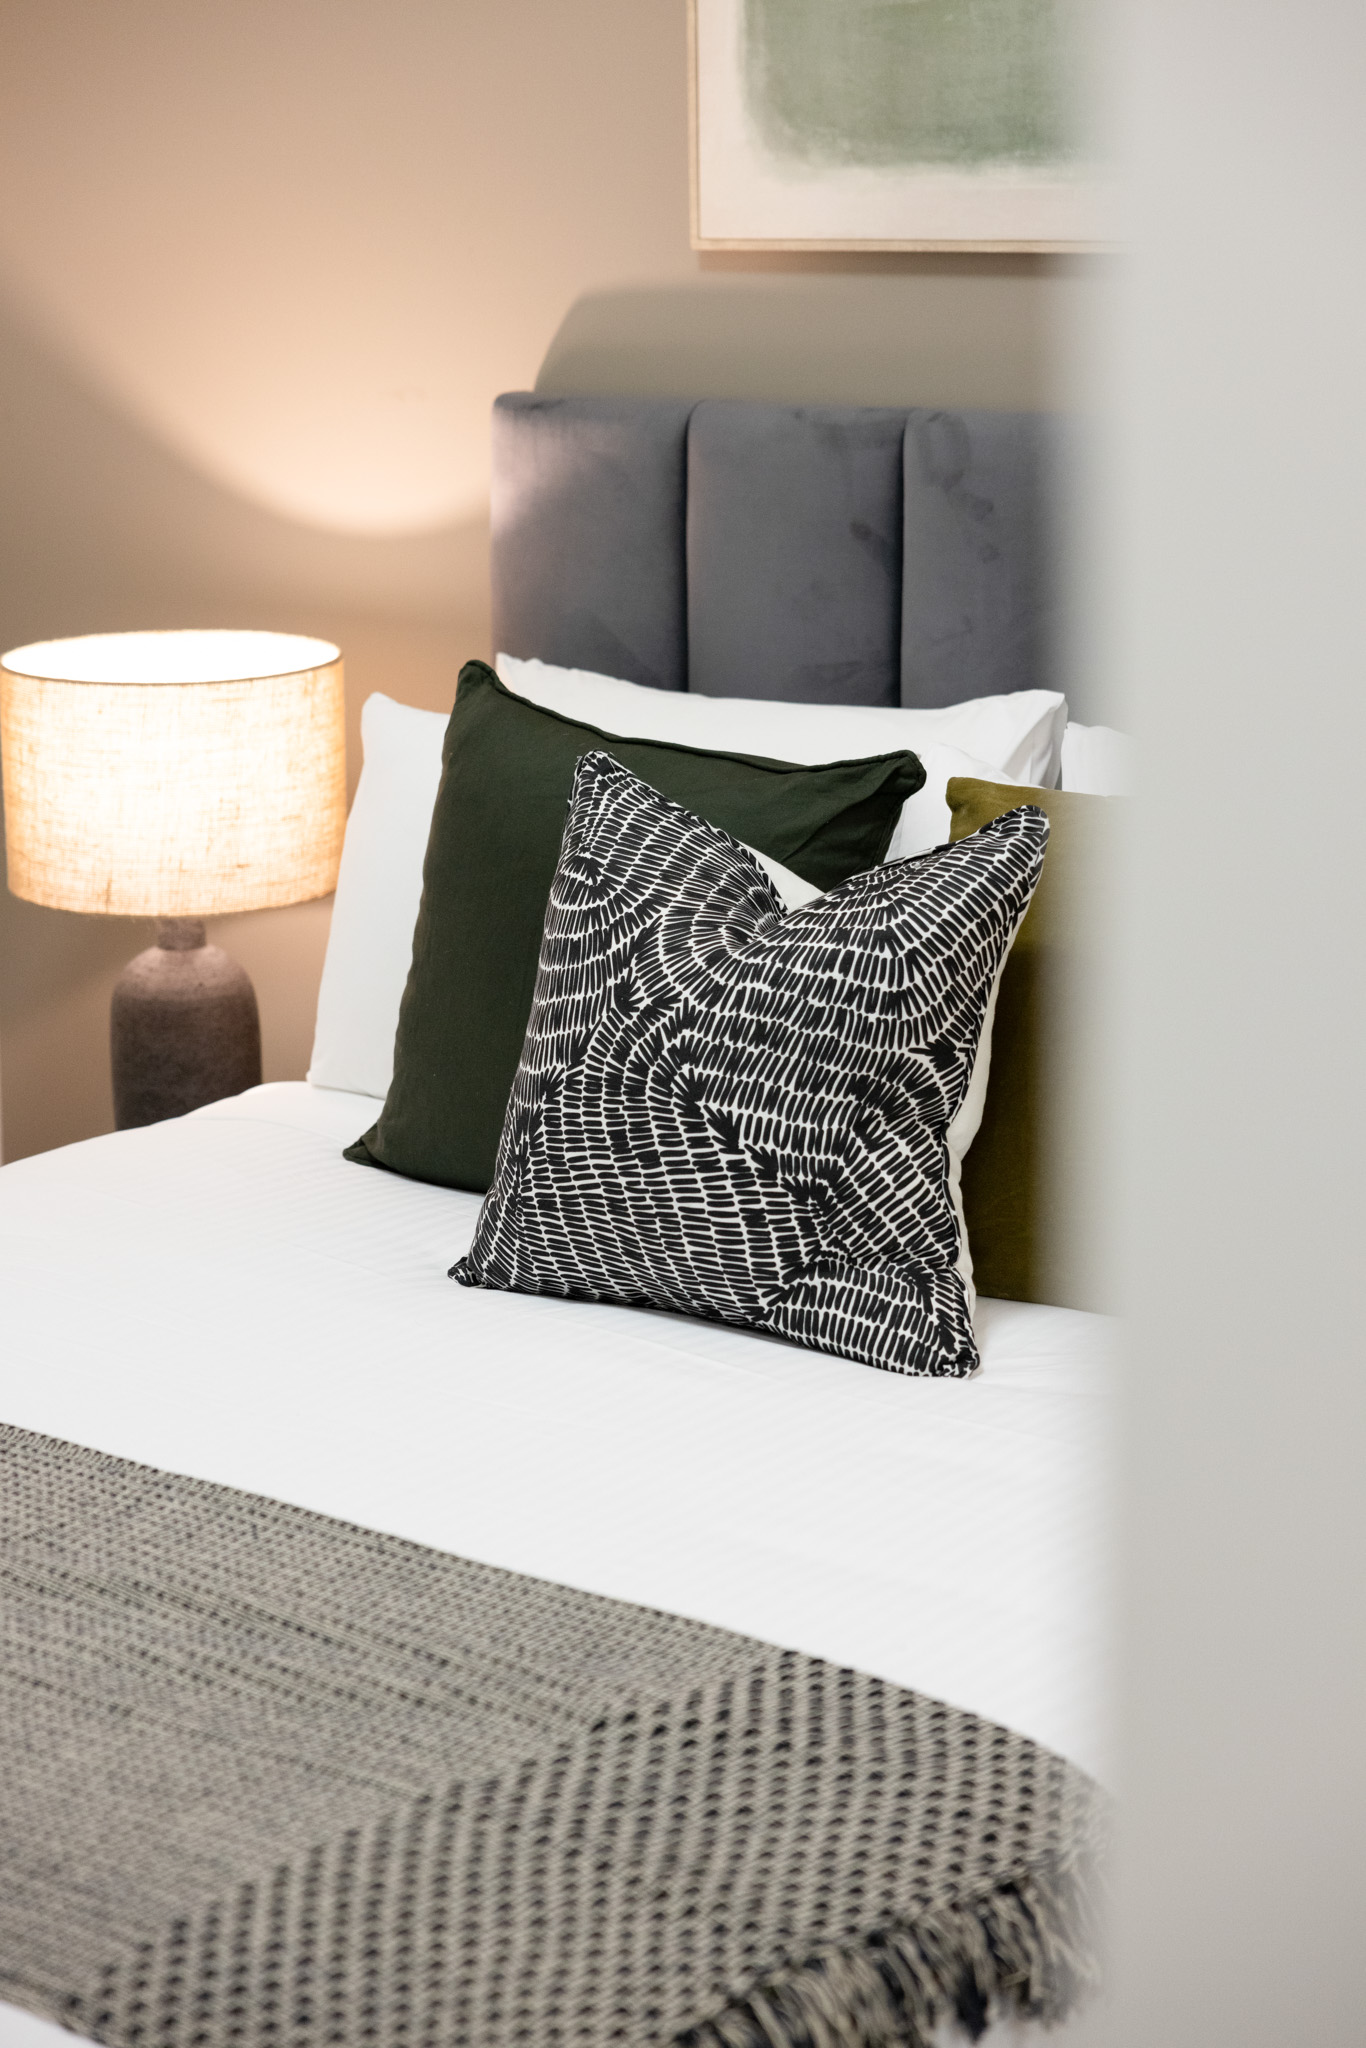 Bedroom Details - Studio Apartment - Alta Apartments - Surry Hills - Sydney - Urban Rest